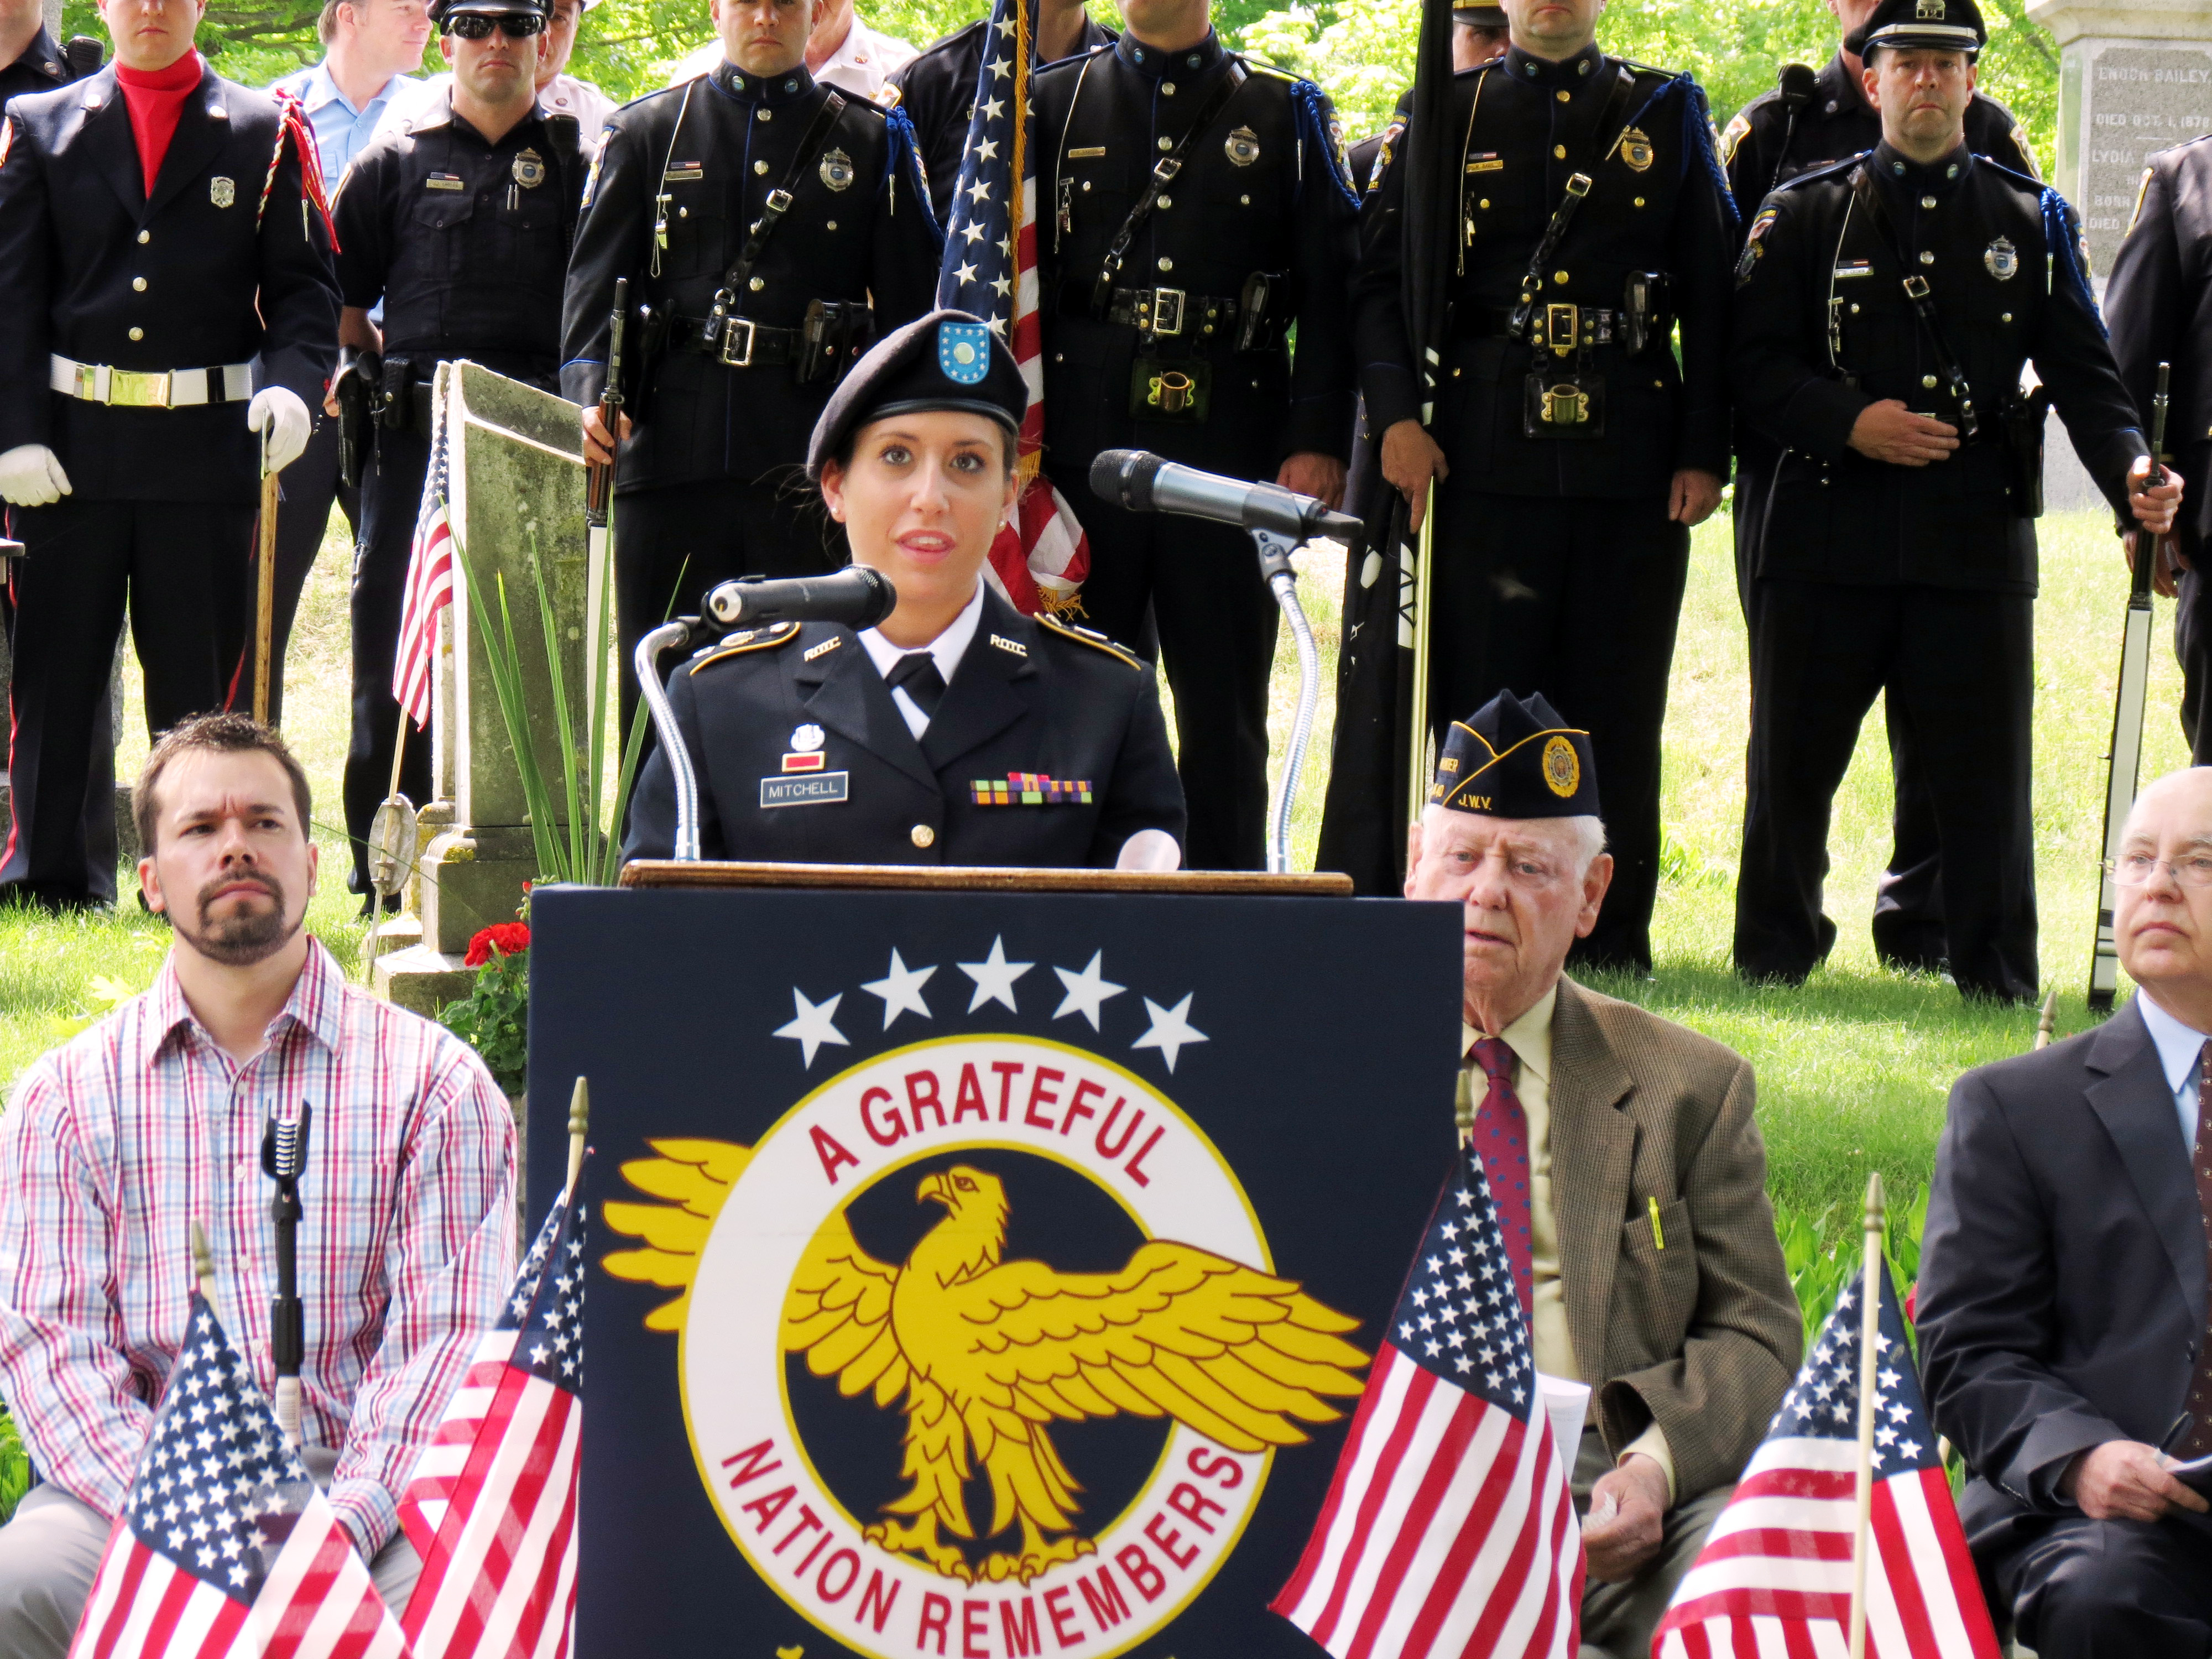 Video/Photos of Memorial Day Service in North Andover, 2014